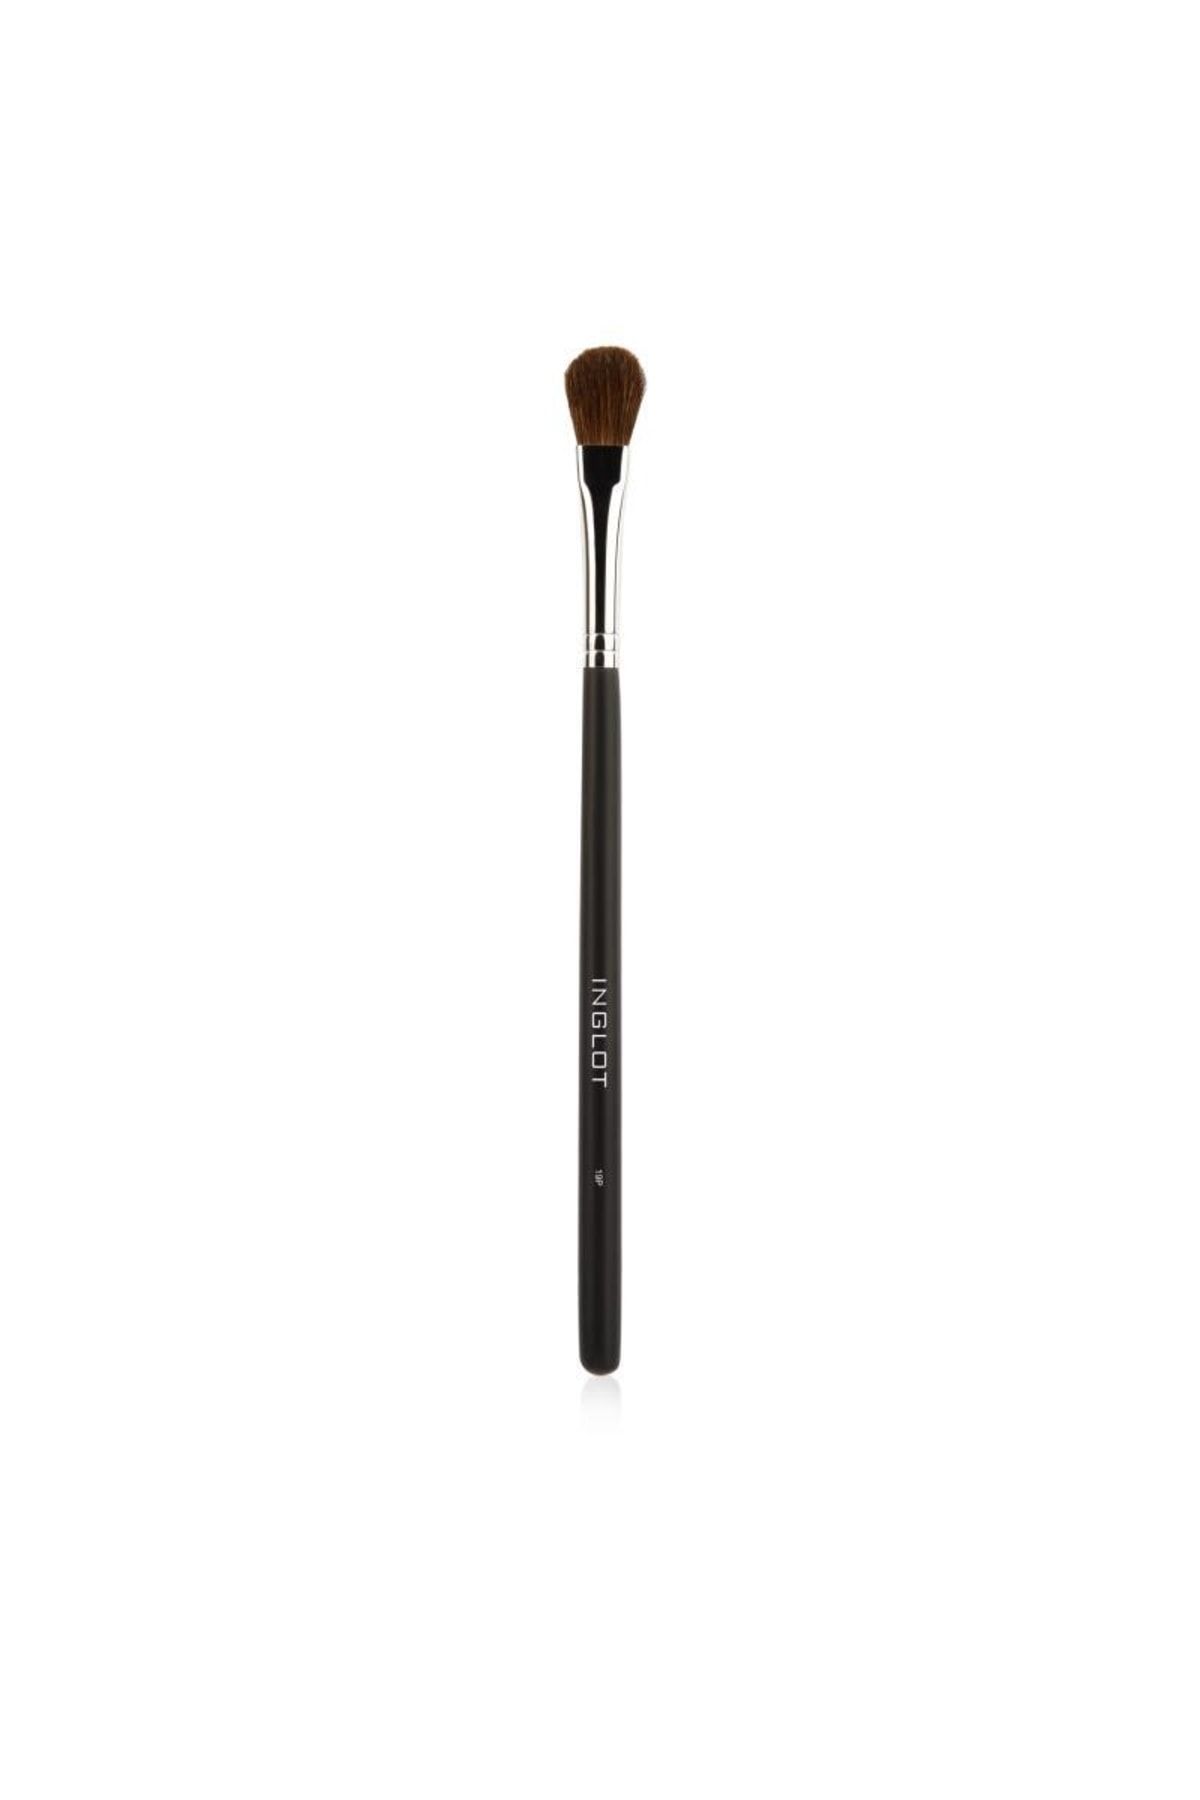 Inglot Makeup Brush 19p